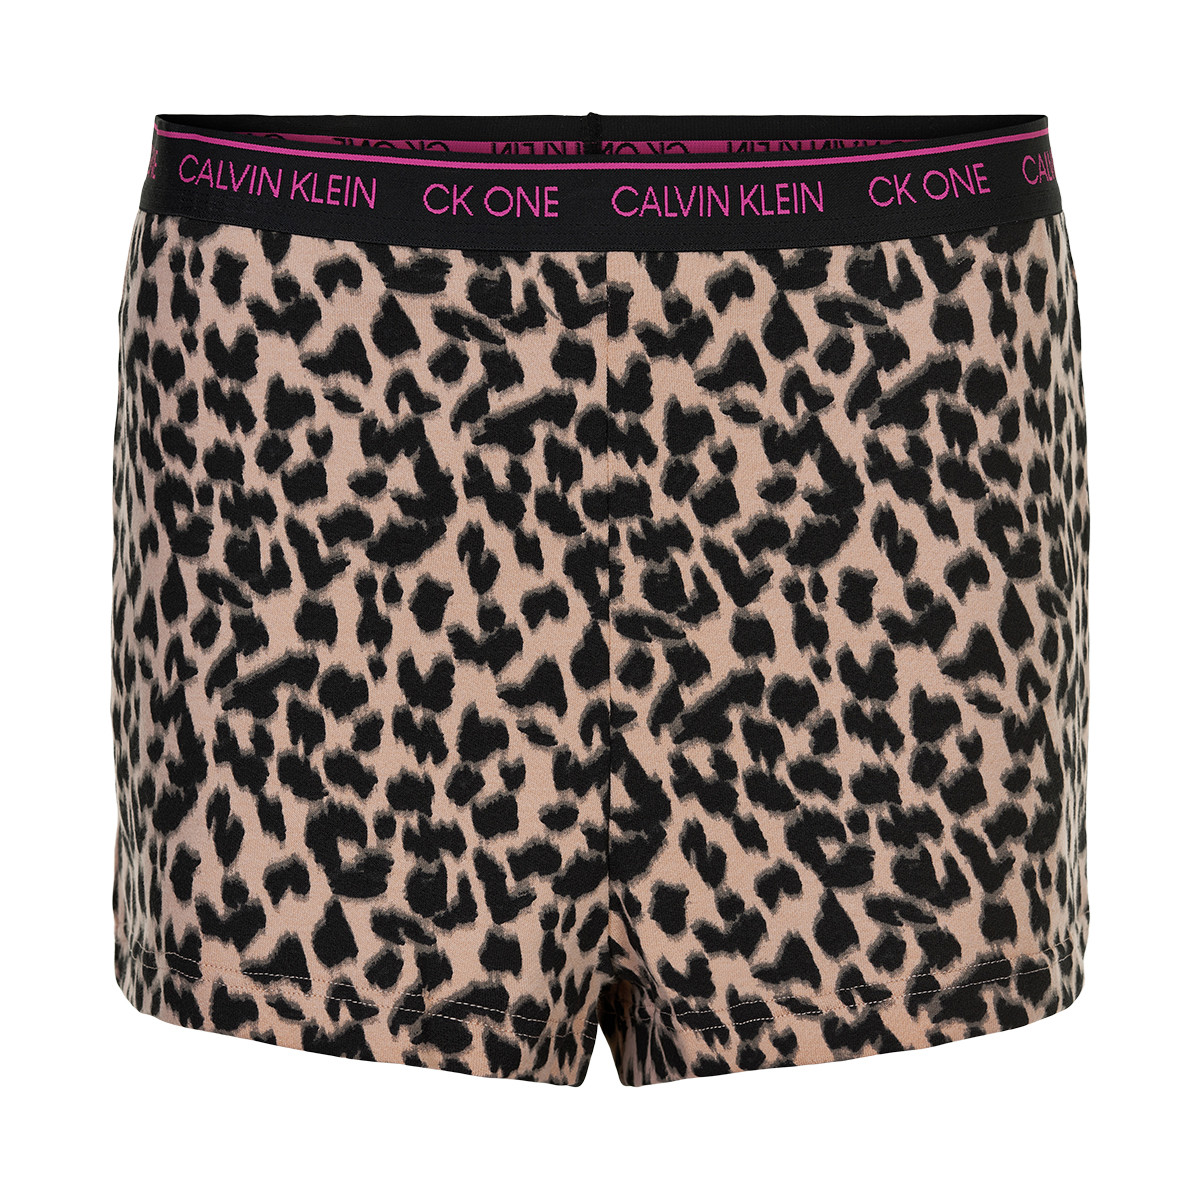 #3 - Calvin Klein Lingeri Shorts, Farve: Multicolor, Størrelse: XS, Dame